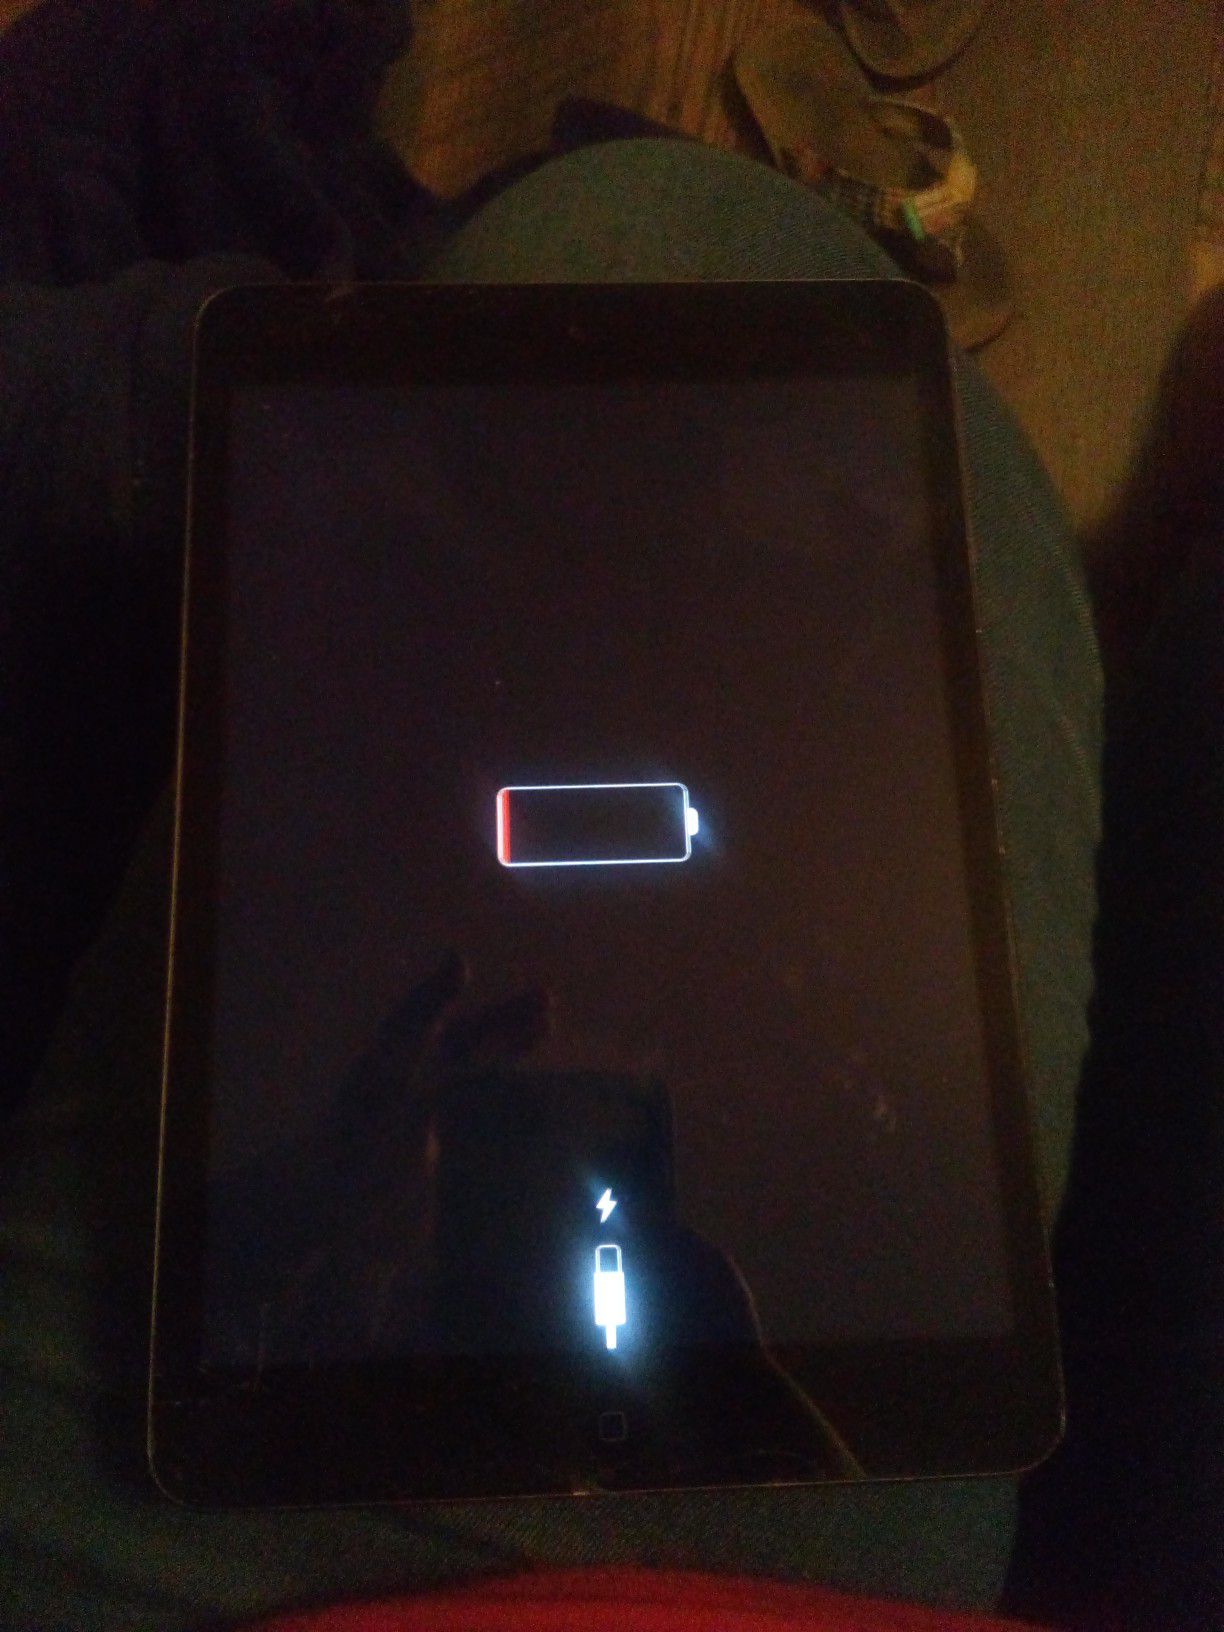 iPad Mini(Black)